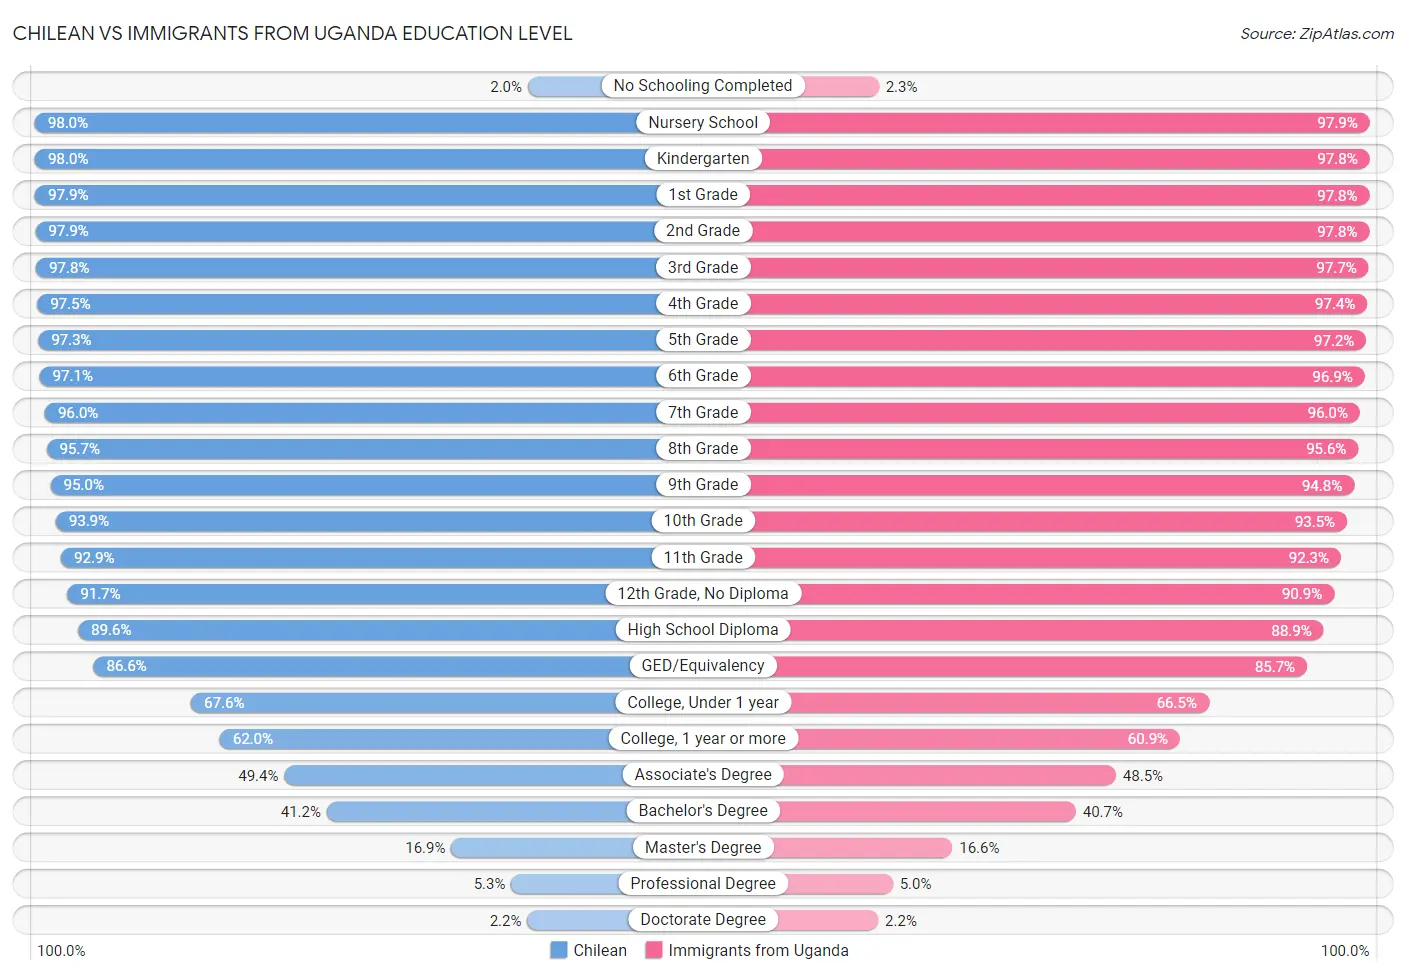 Chilean vs Immigrants from Uganda Education Level